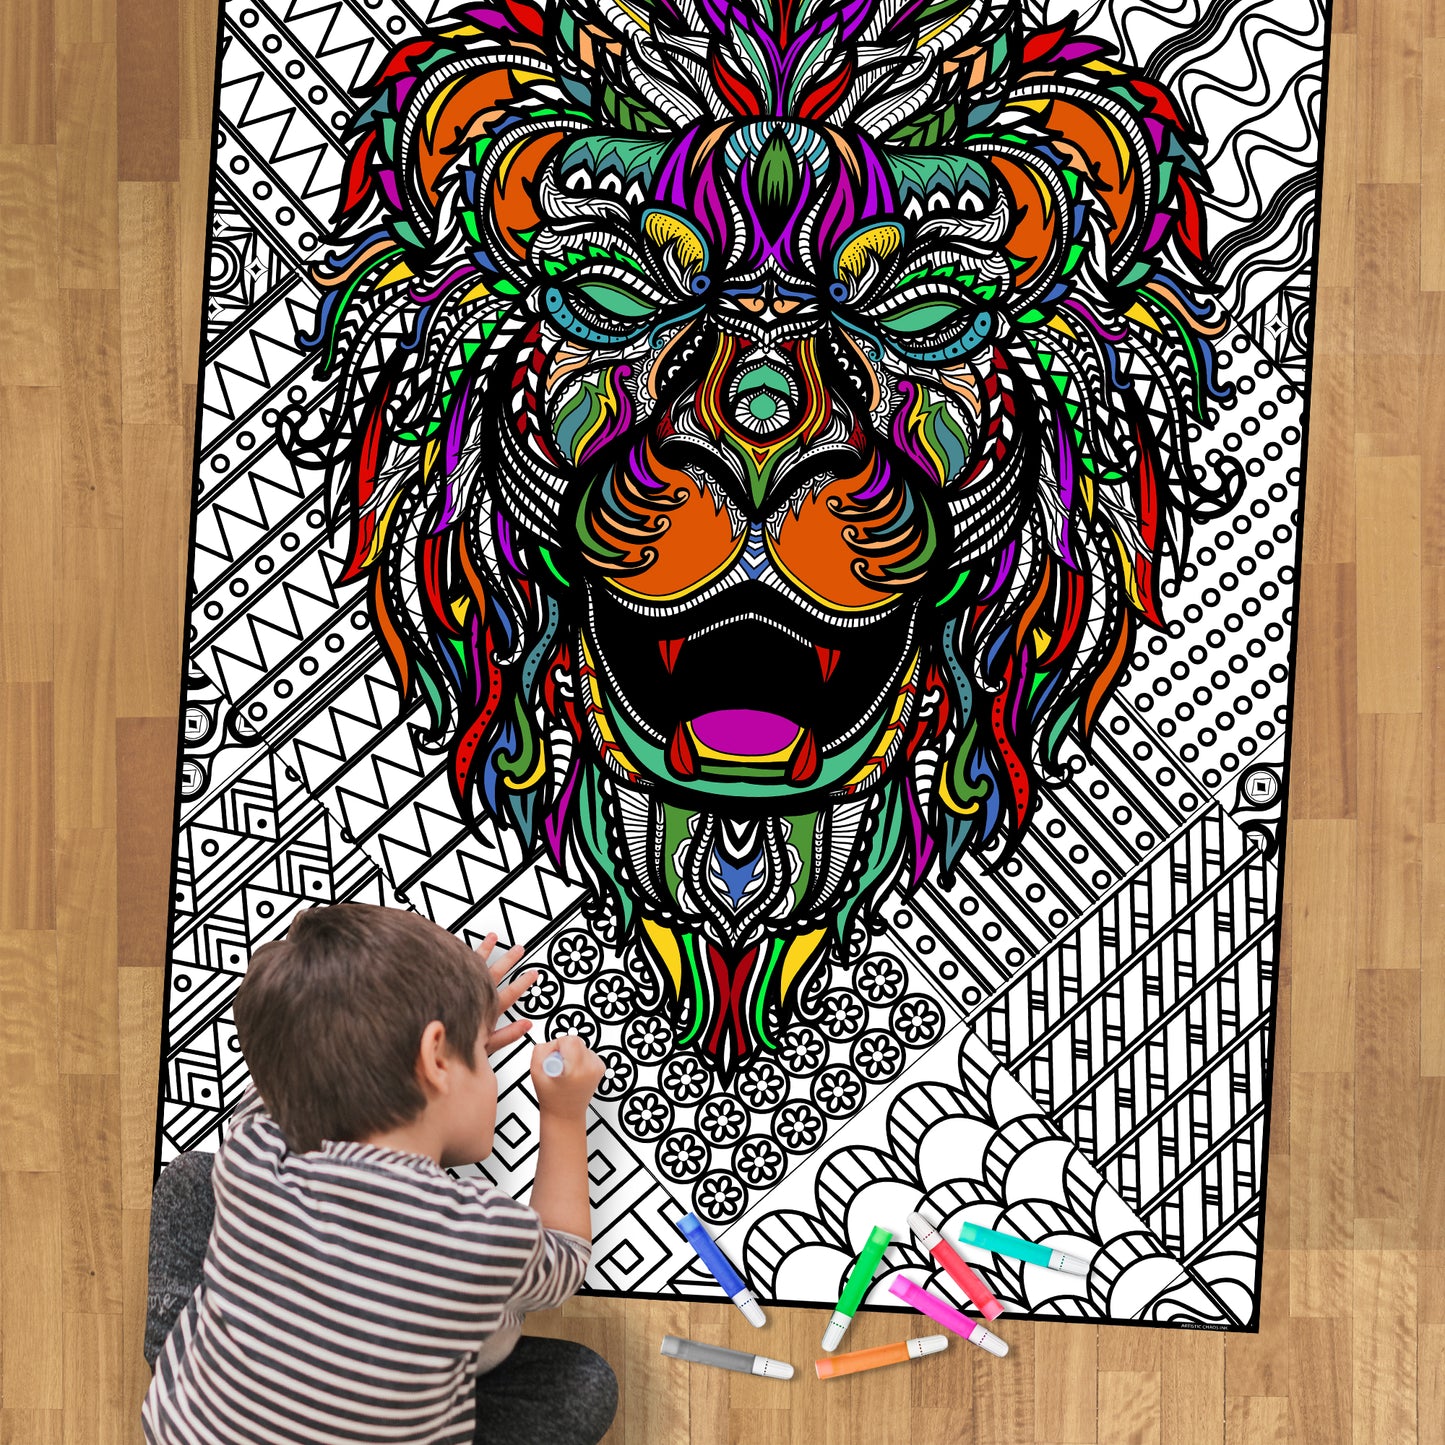 Premium Giant Lion Coloring Poster